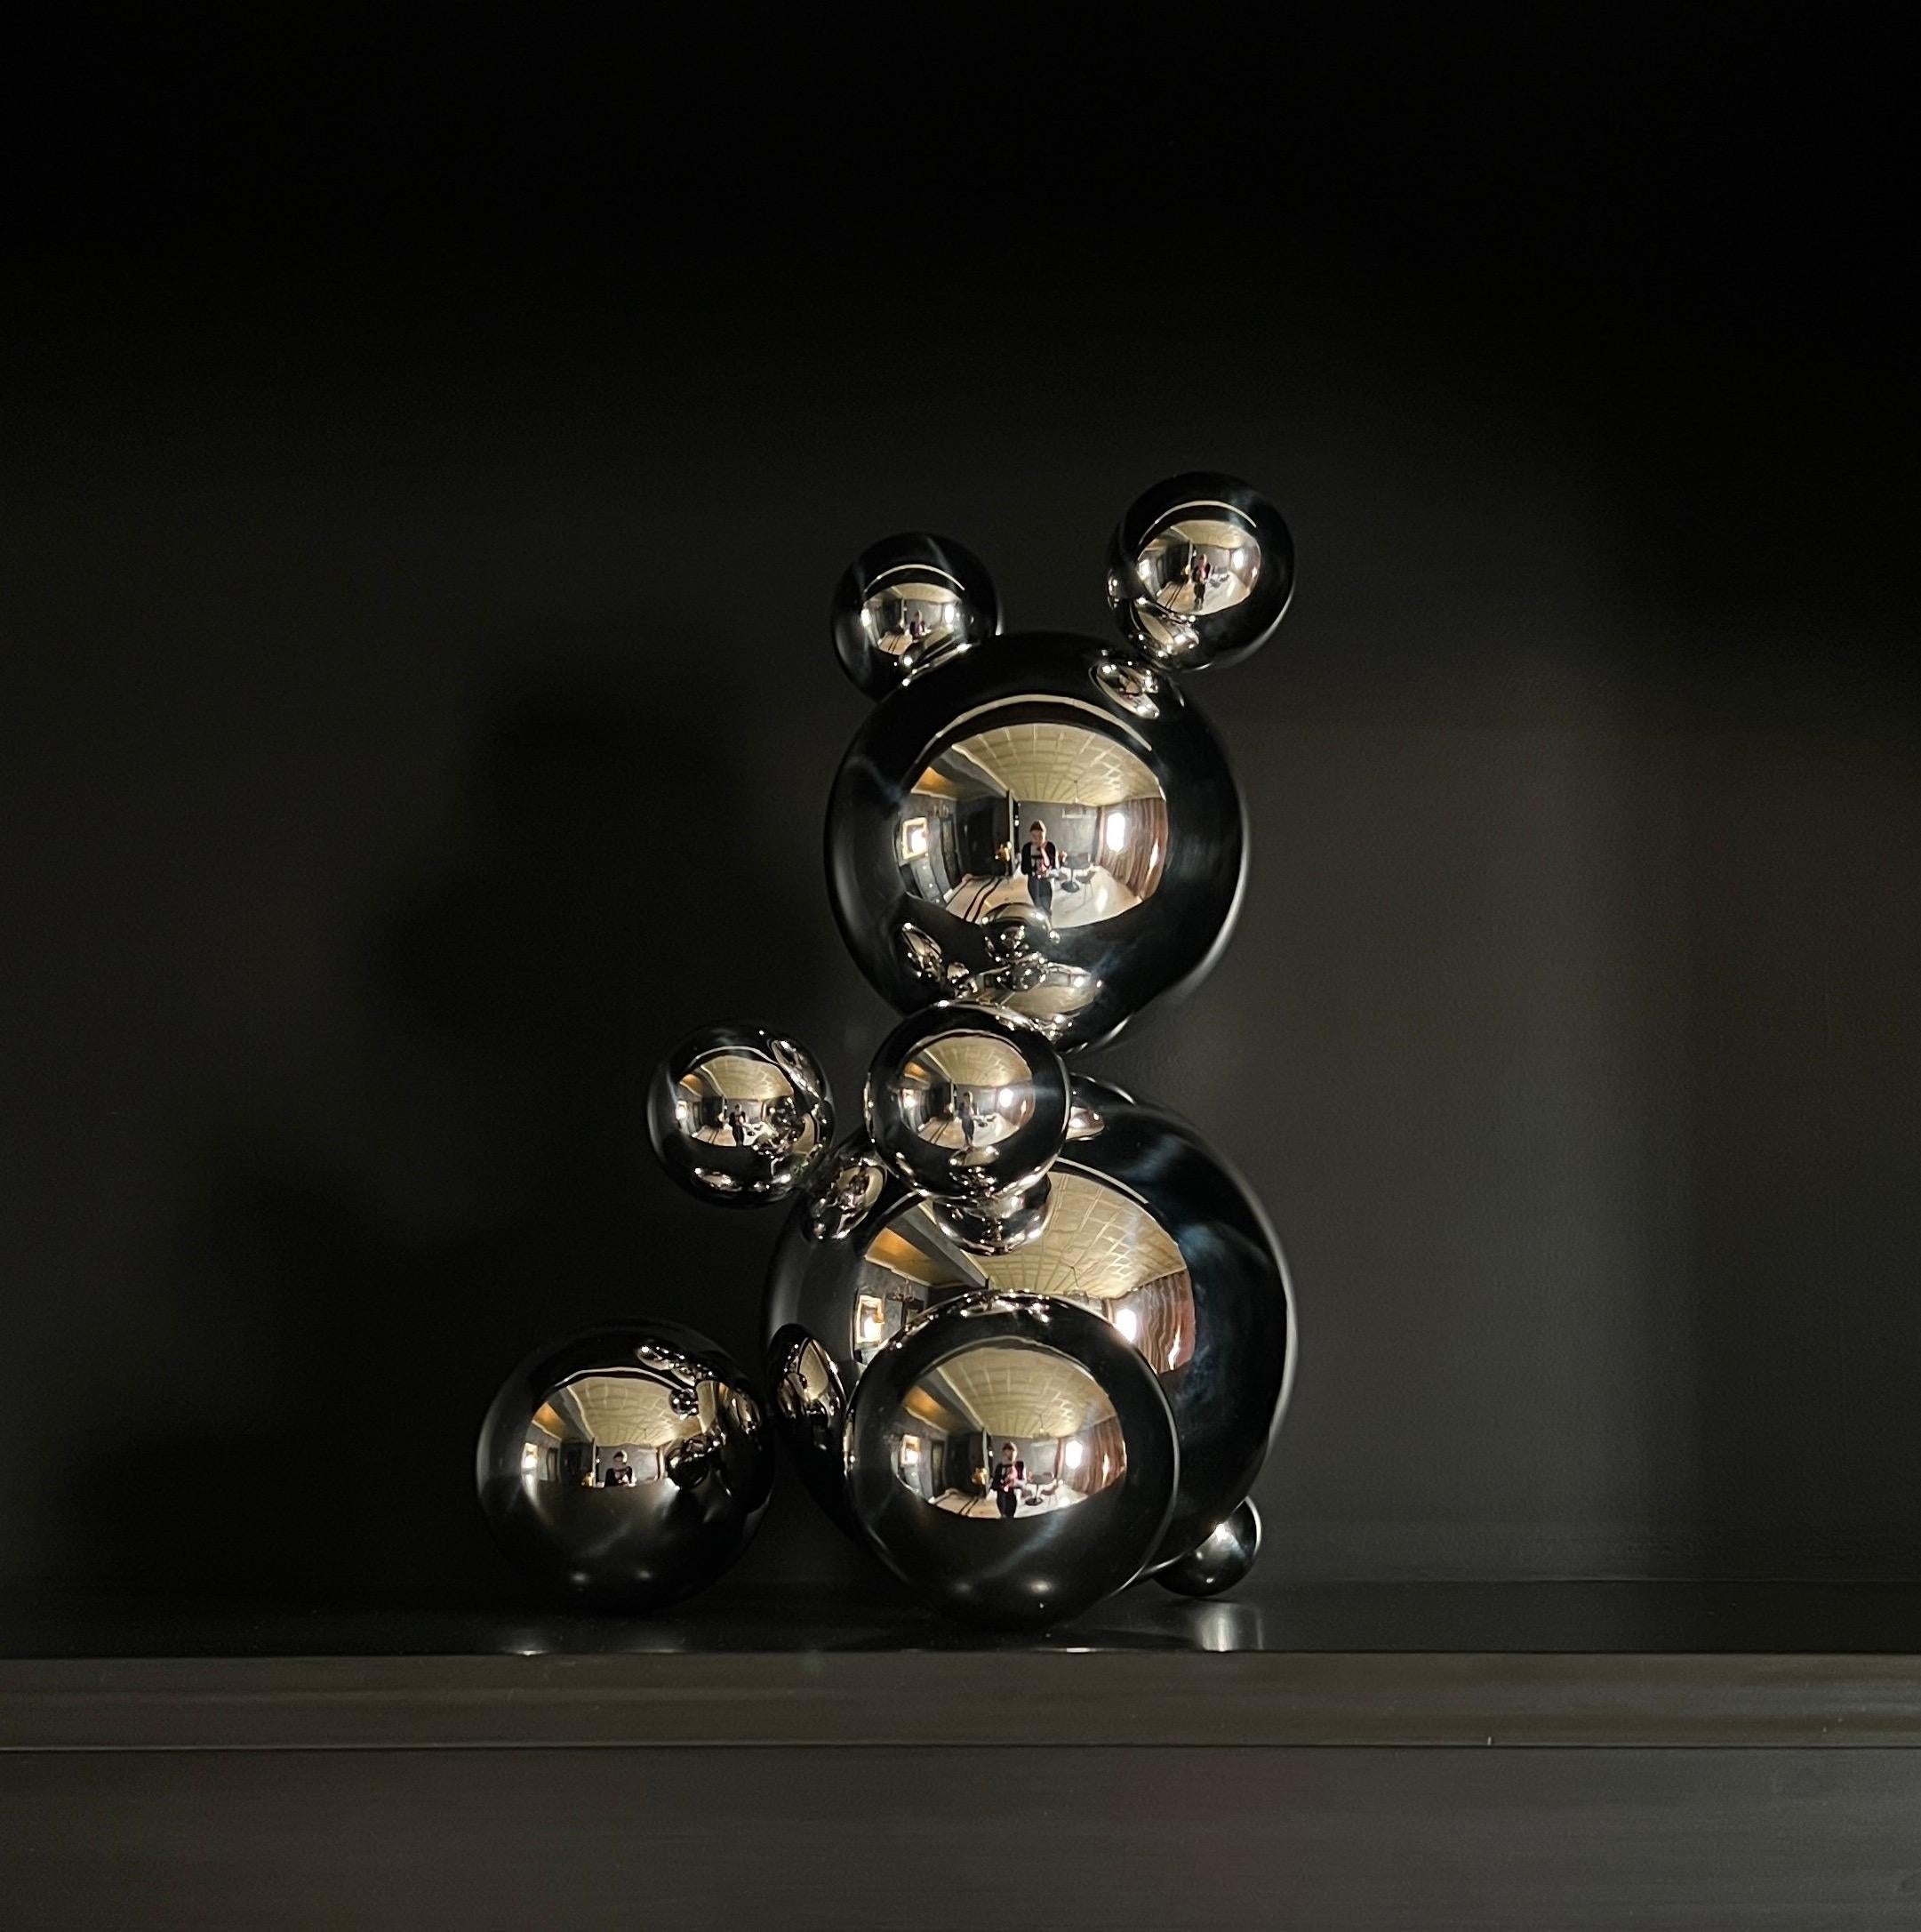 Middle Stainless Steel Bear 'David' Sculpture Minimalistic Animal 4